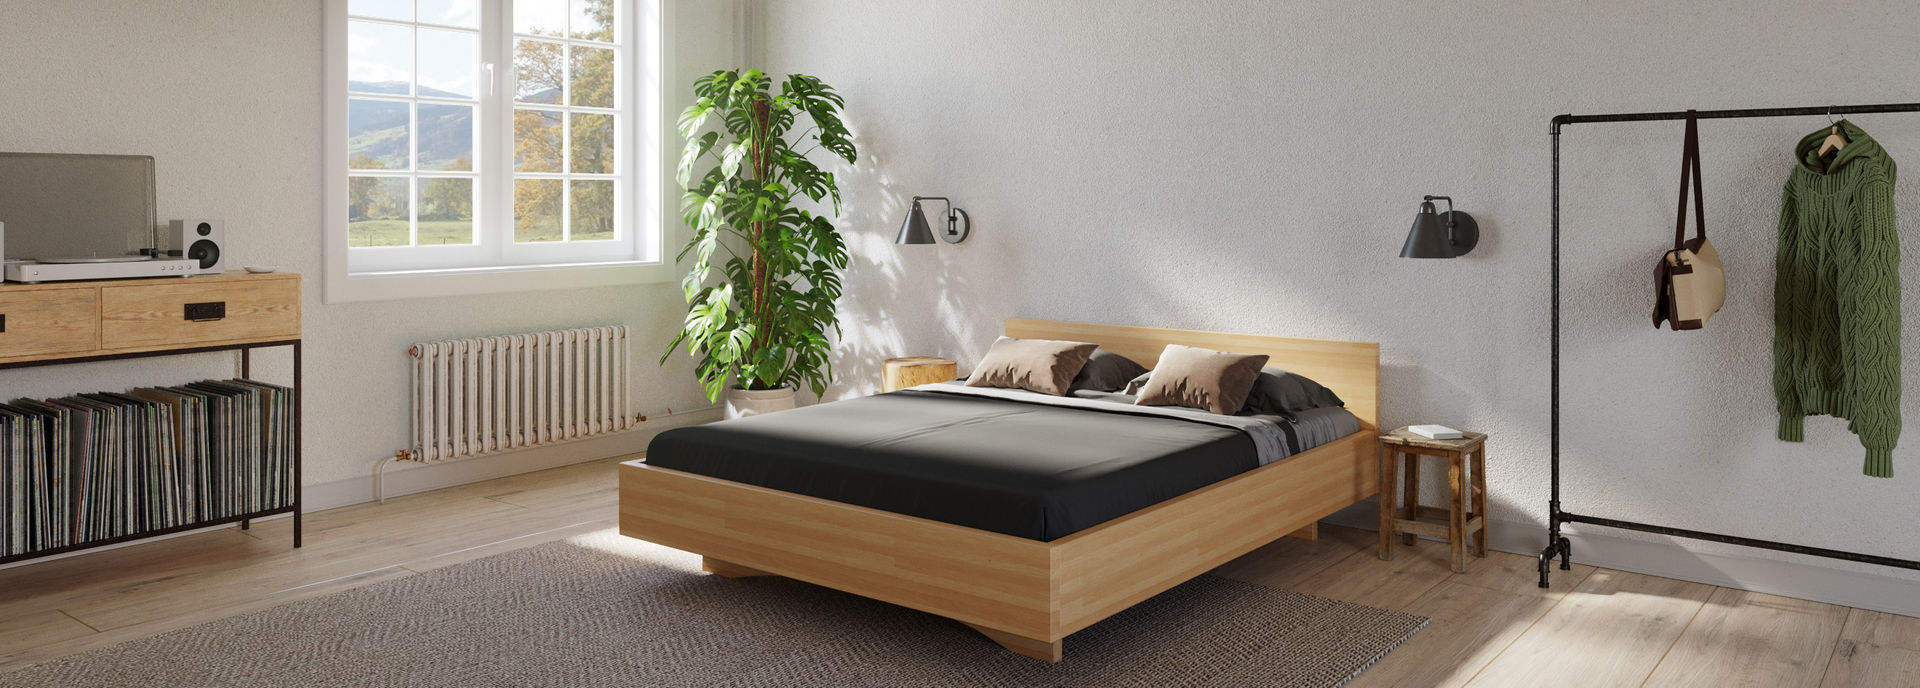 Betten - Massiv und Langlebig, Woodq UG (haftungsbeschränkt) Woodq UG (haftungsbeschränkt) ห้องนอน เตียงนอนและหัวเตียง